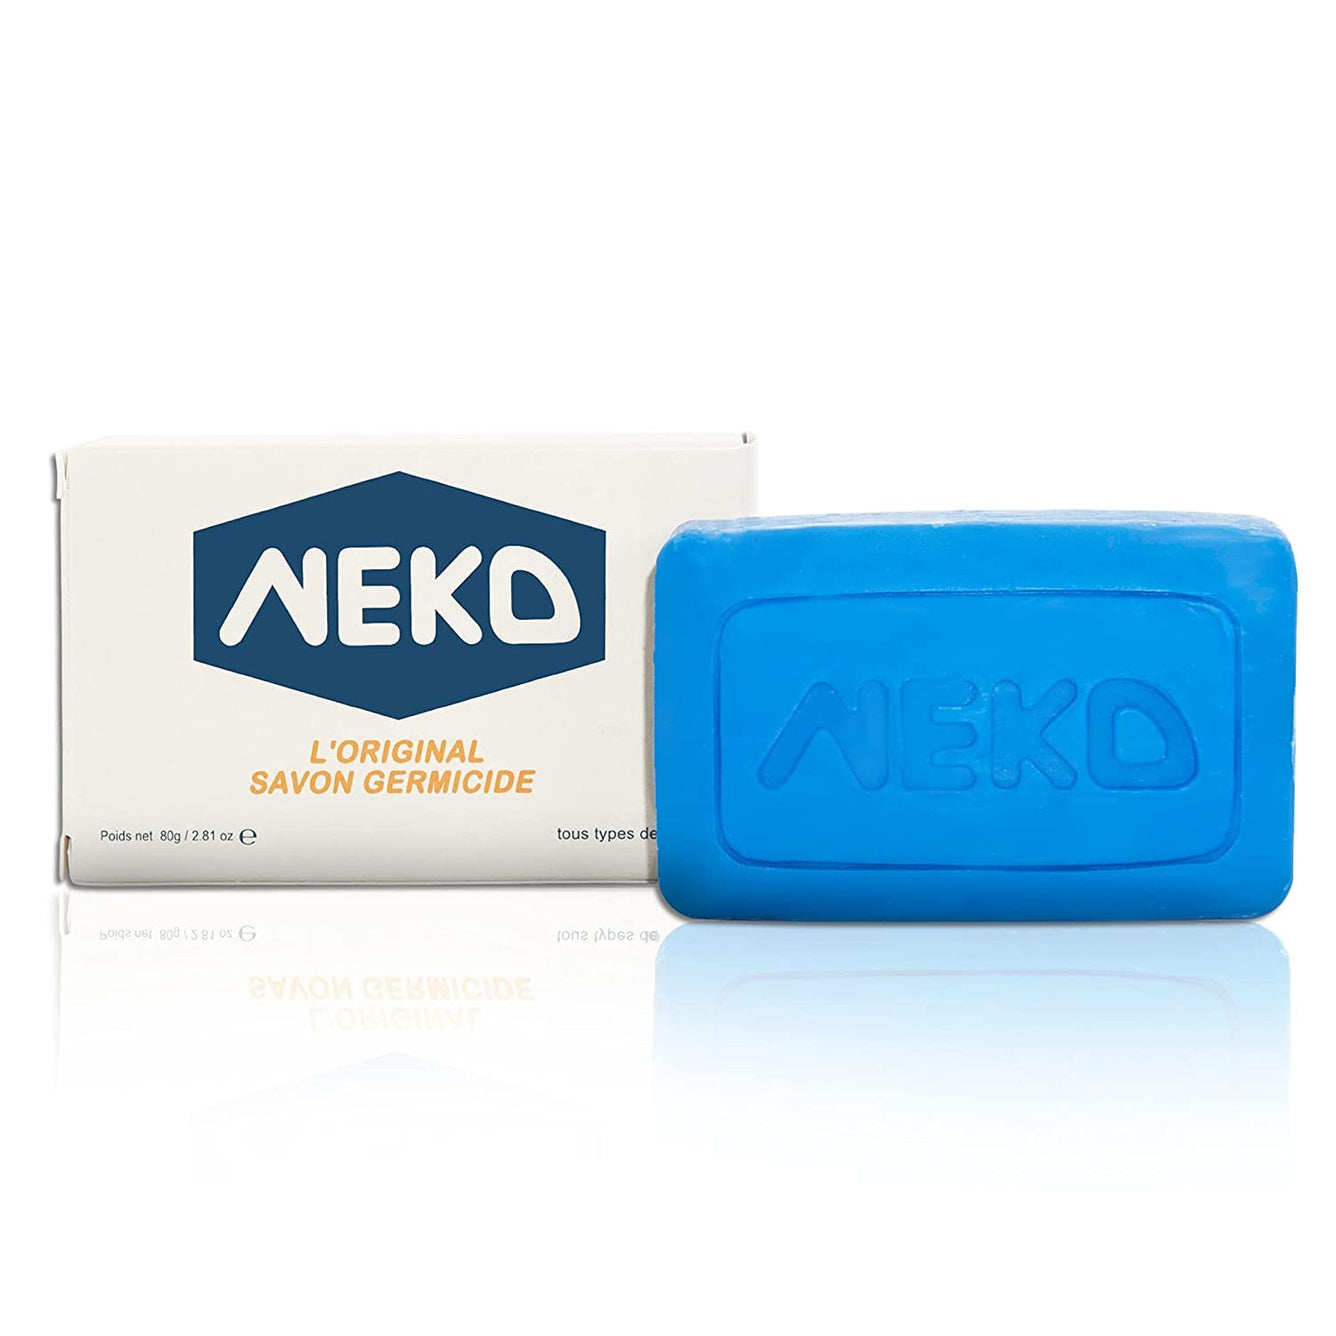 Neko Germicidal Soap - 80g / 2.82 oz Neko - Mitchell Brands - Skin Lightening, Skin Brightening, Fade Dark Spots, Shea Butter, Hair Growth Products